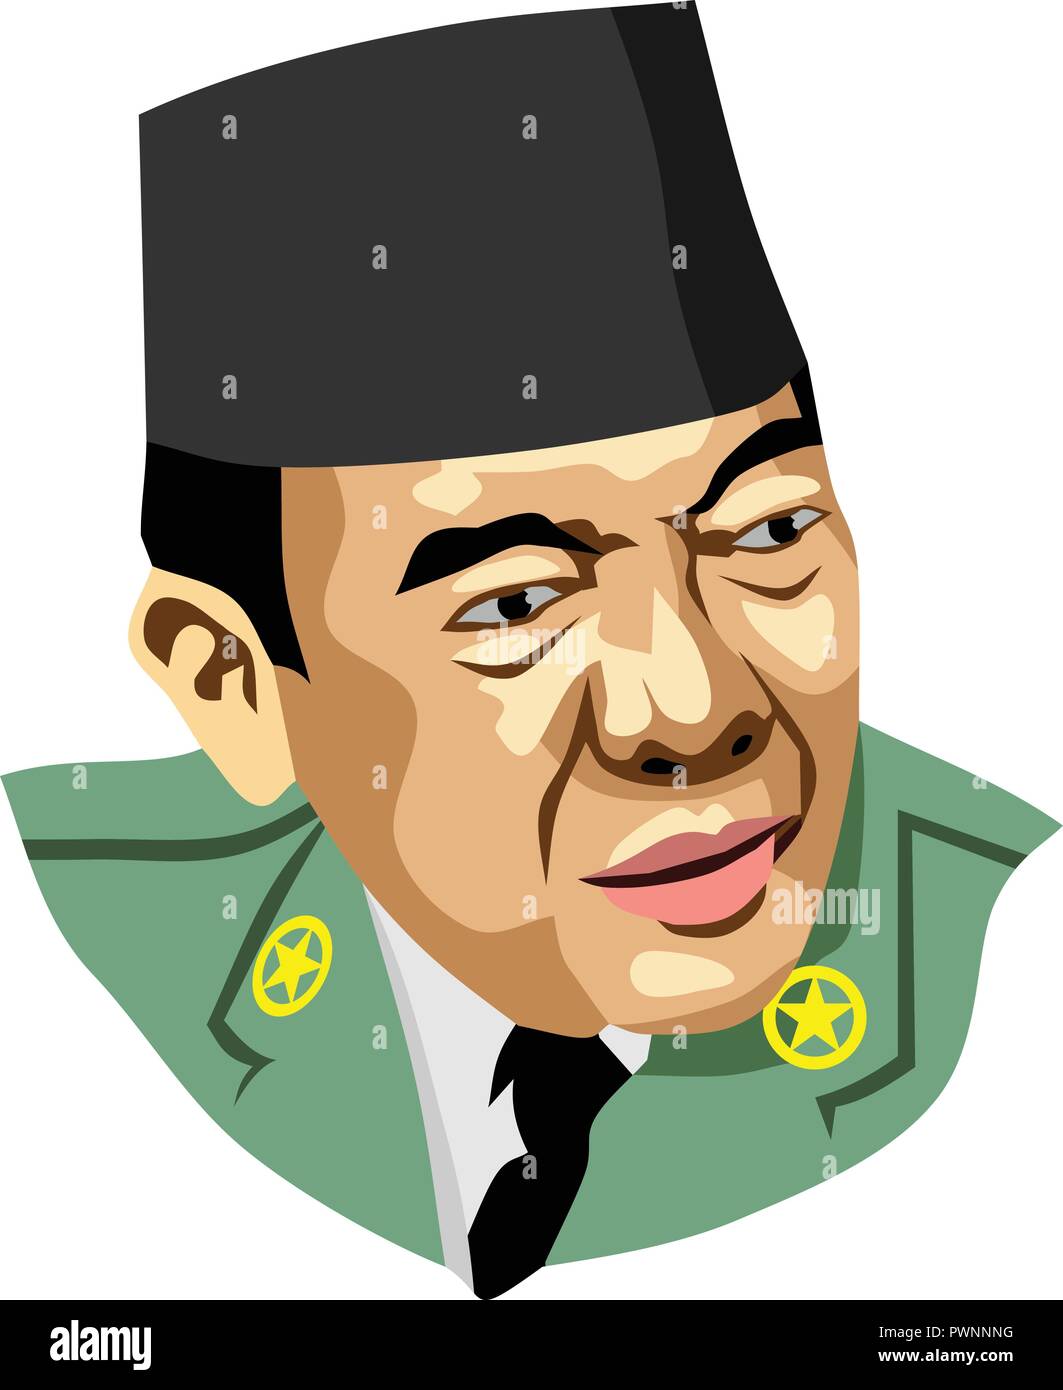 1st President of Republic of Indonesia - Soekarno Stock Vector Image & Art  - Alamy